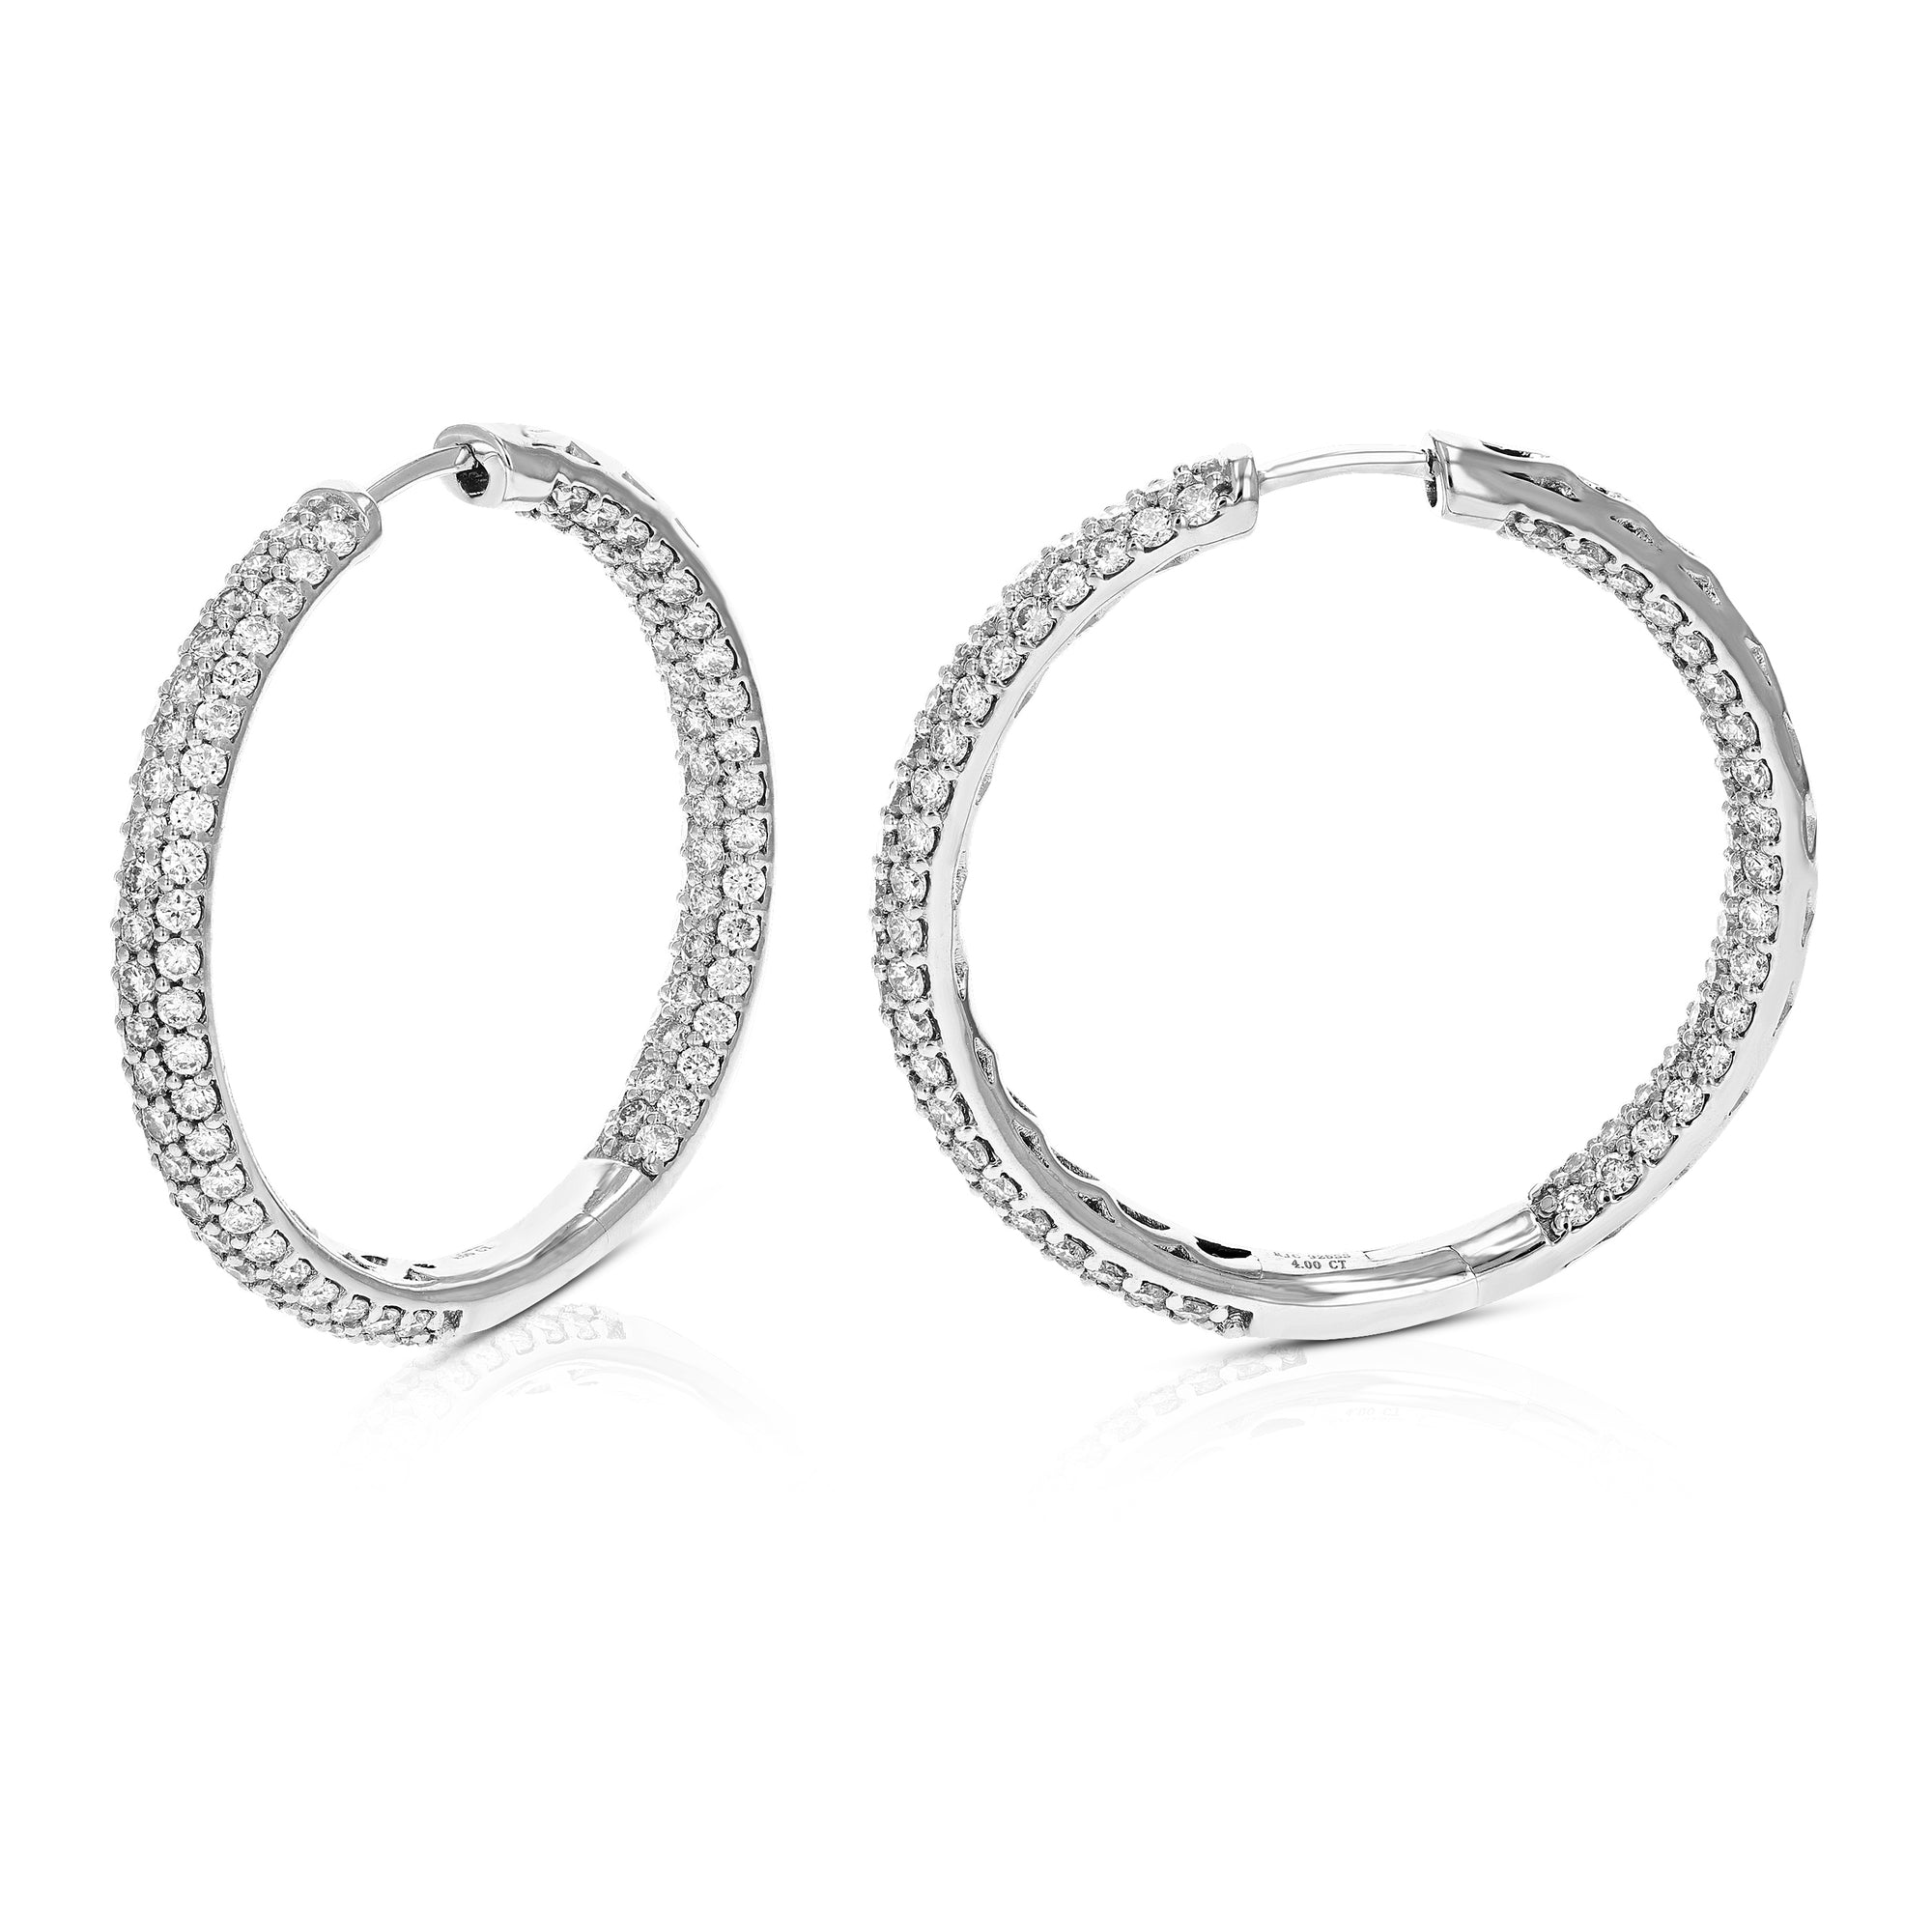 4 cttw Diamond Hoop Earrings for Women, Round Lab Grown Diamond Earrings in .925 Sterling Silver, Prong Setting, 1 1/4 Inch